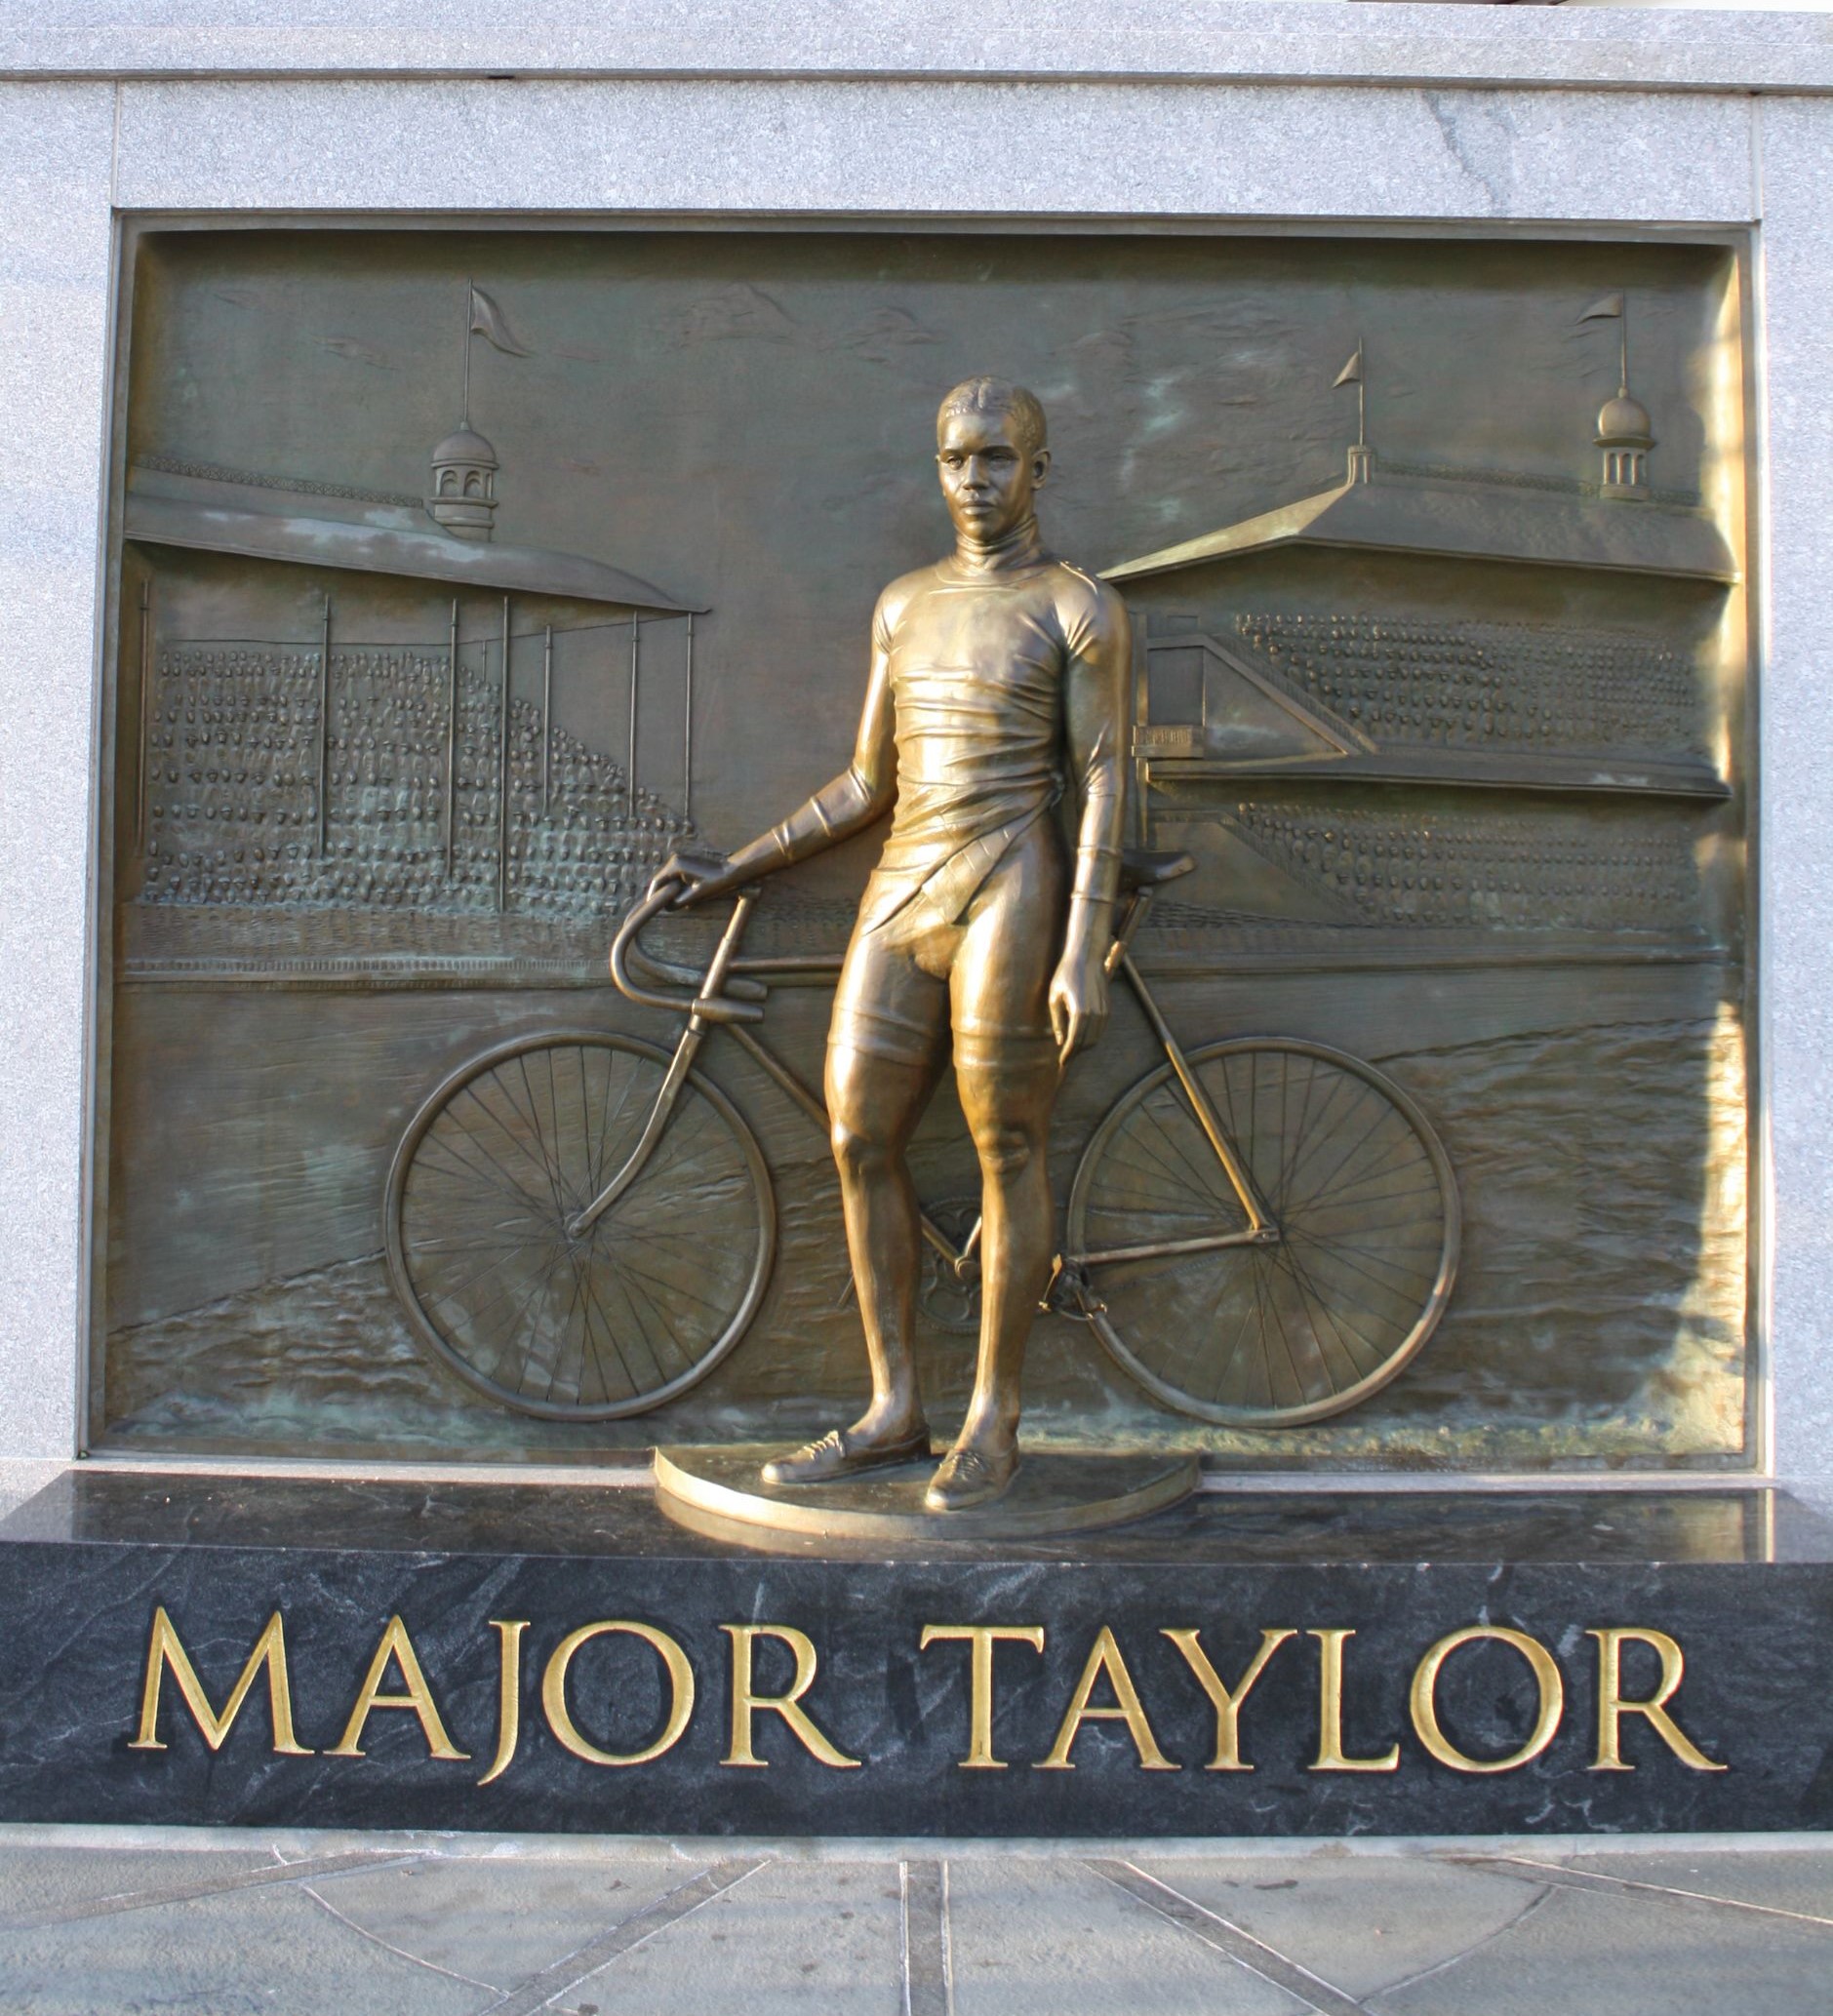 Major Taylor Statue